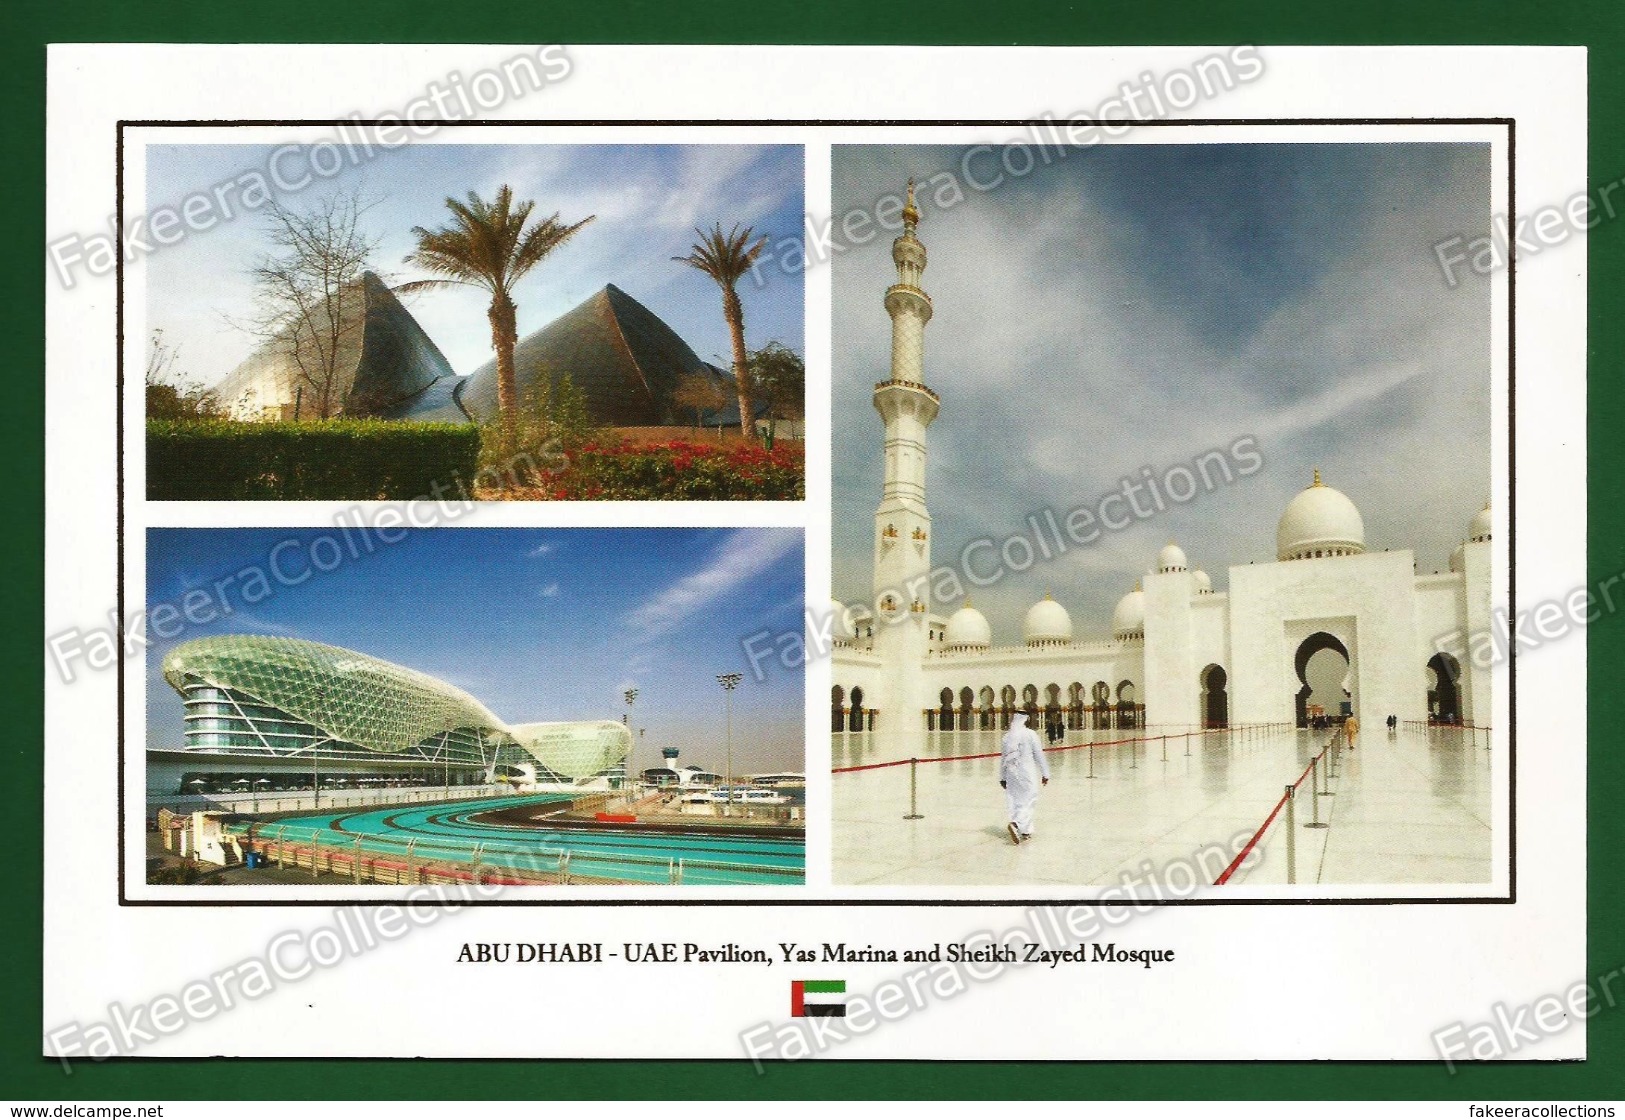 UNITED ARAB EMIRATES / UAE - ABU DHABI Pavilion, Yas Marina And Sheikh Zayed Mosque - Postcard # 48 - Unused As Scan - Ver. Arab. Emirate